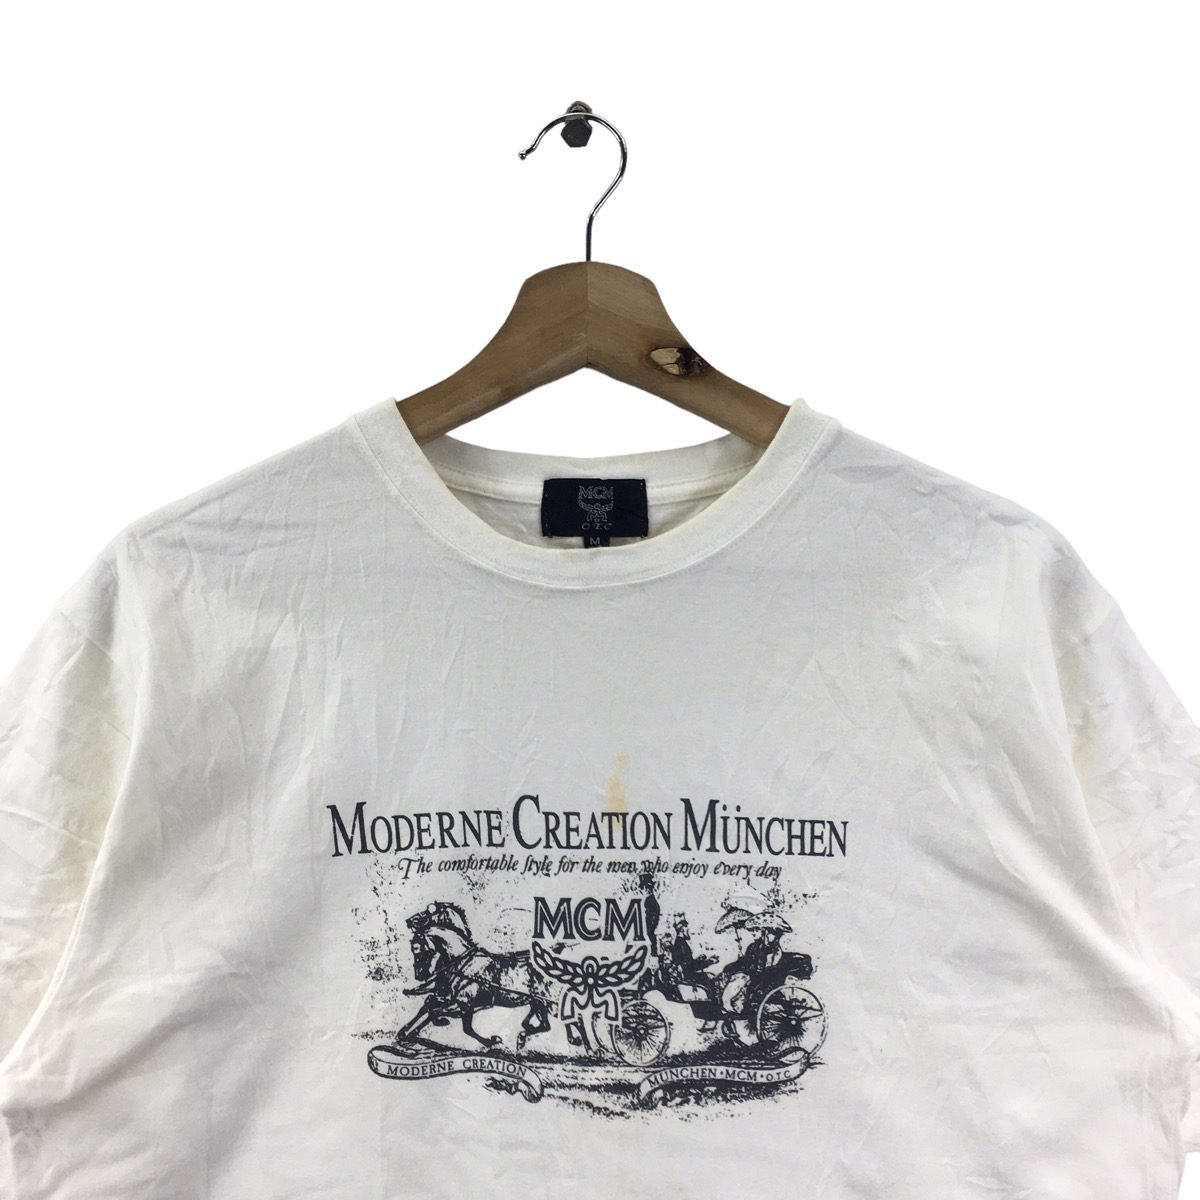 MCM OTC Moderne Creation Muchen Tee Shirt Over The Counter - 2